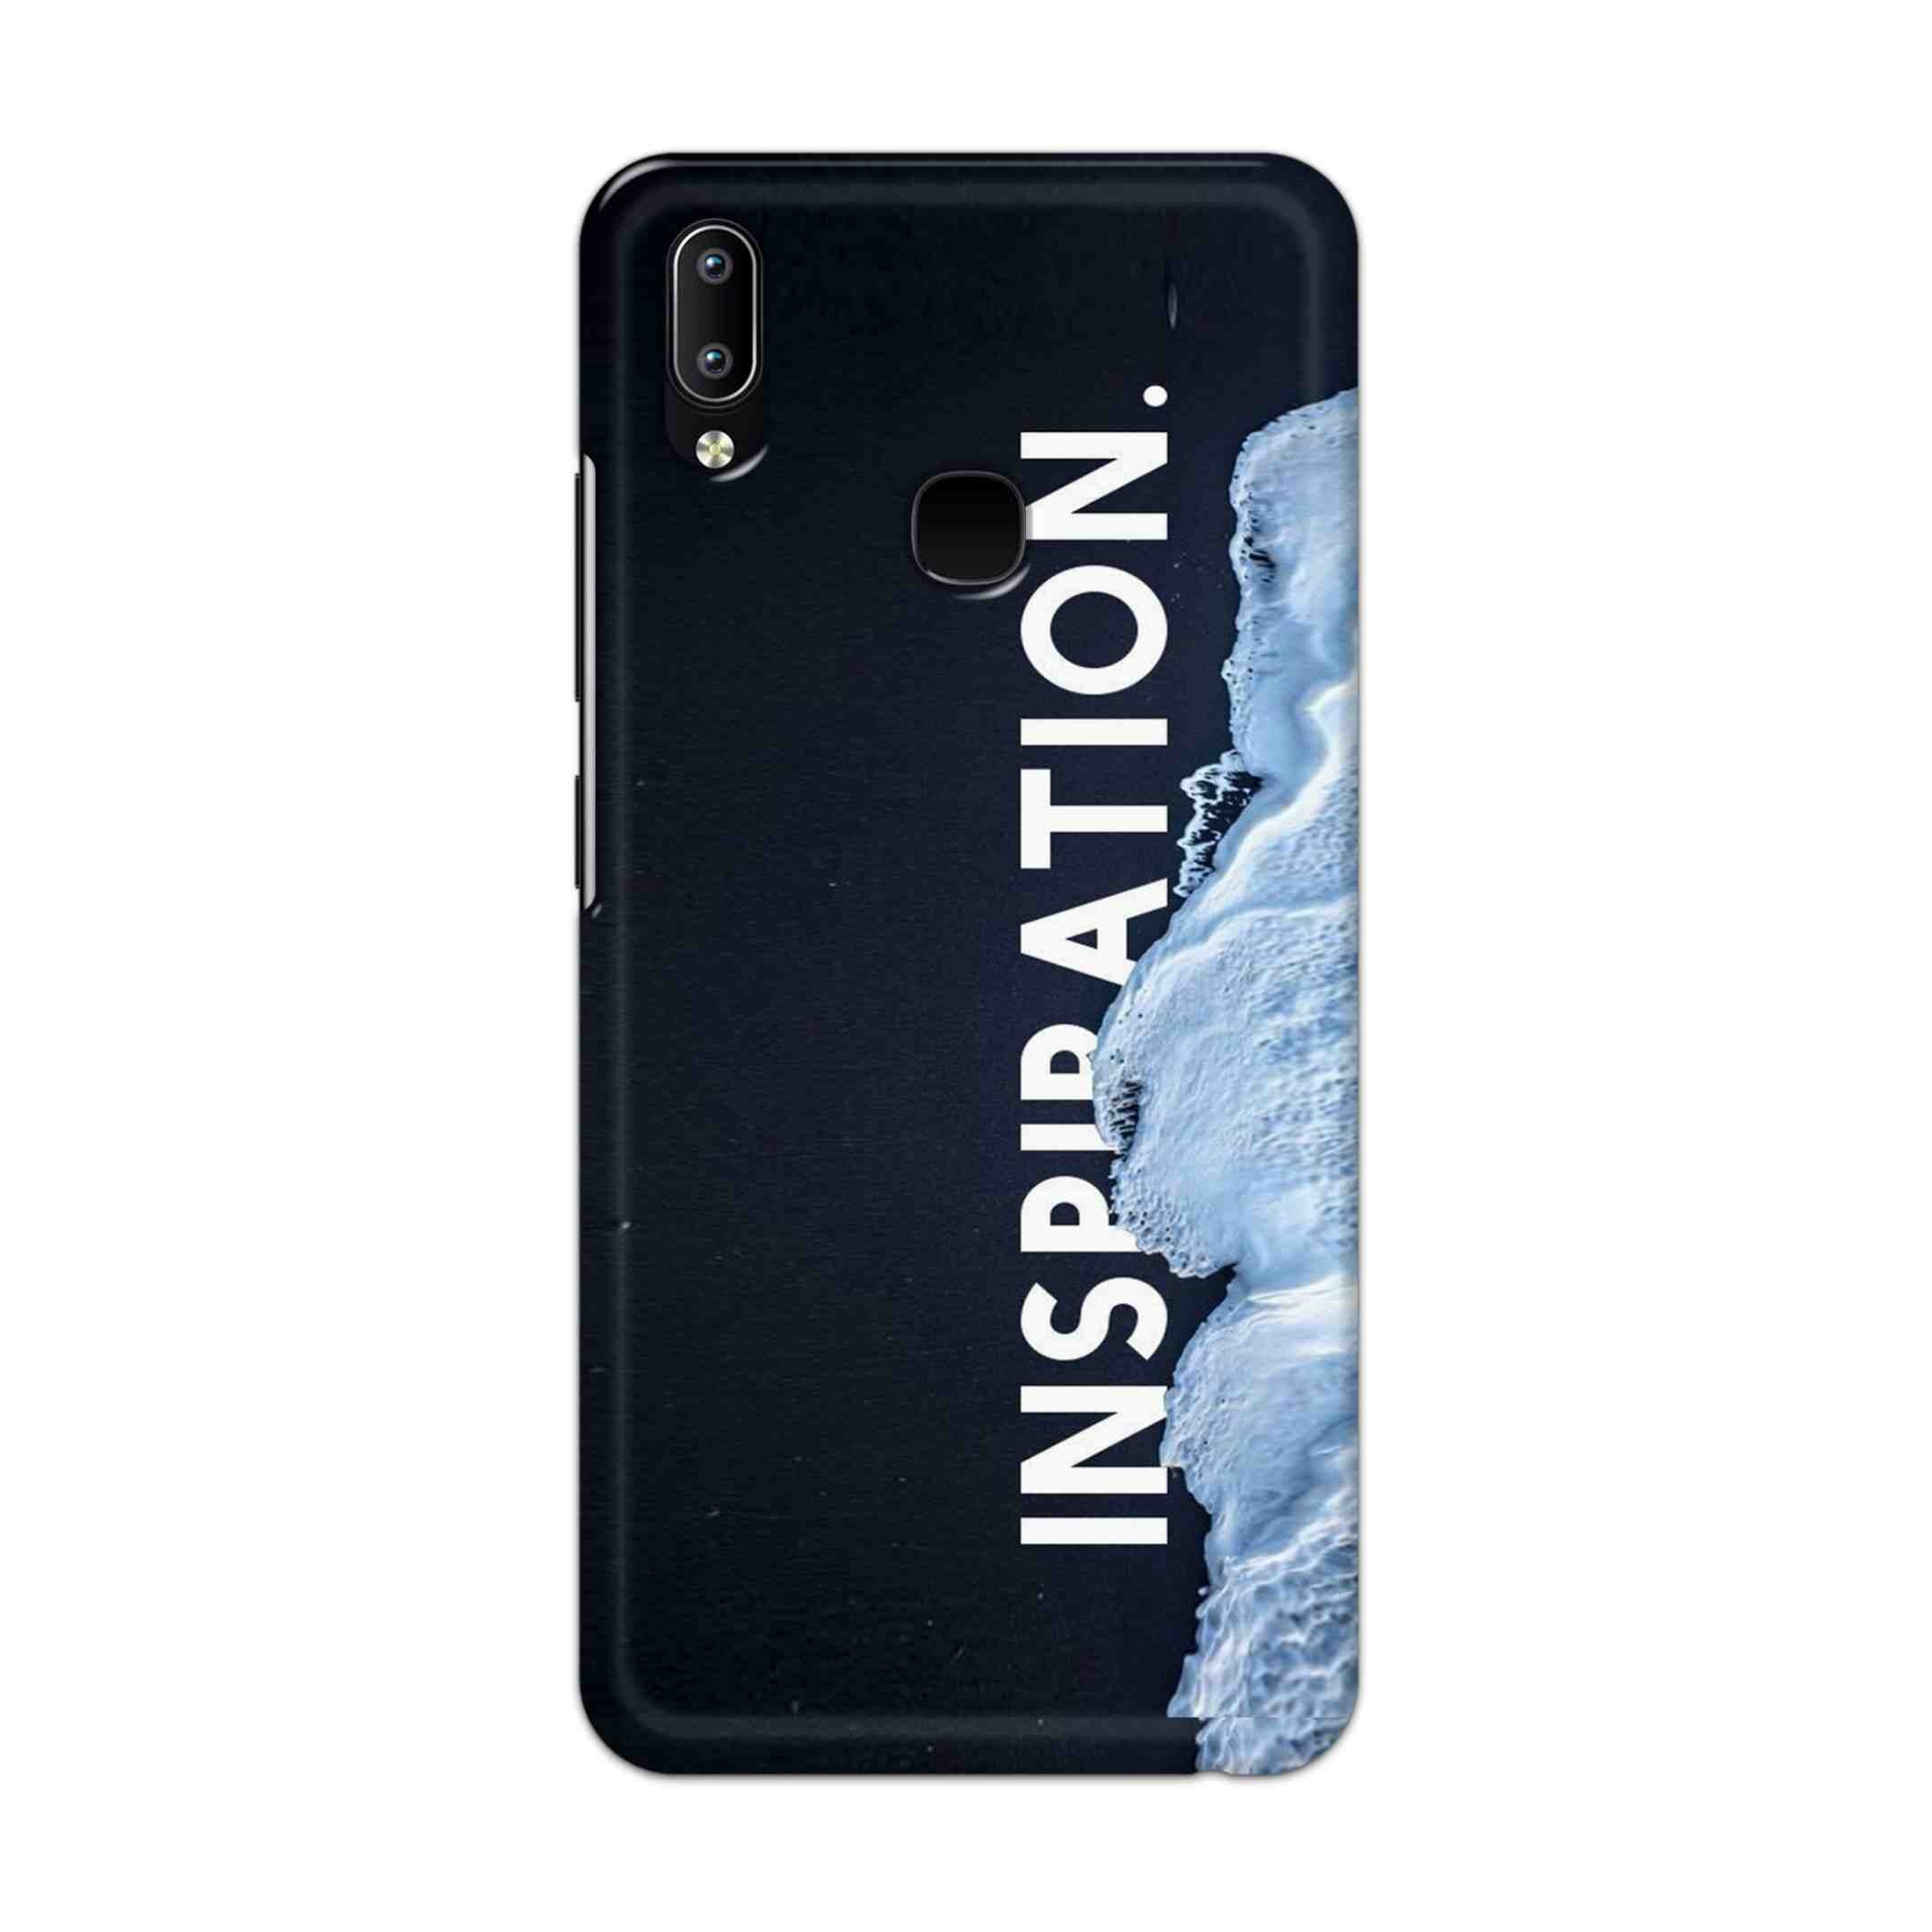 Buy Inspiration Hard Back Mobile Phone Case Cover For Vivo Y95 / Y93 / Y91 Online